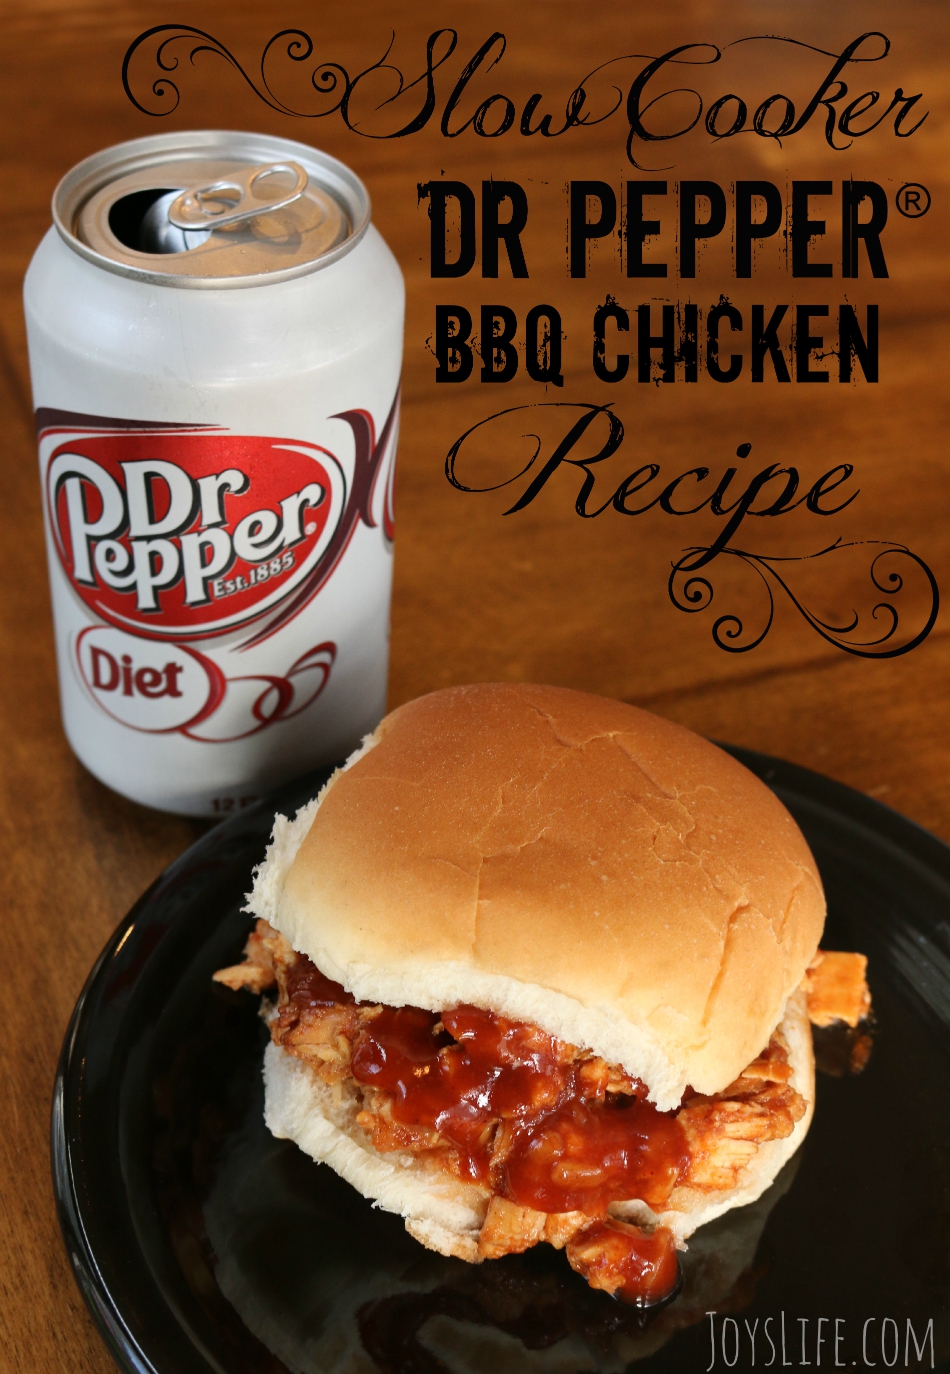 Slow Cooker Dr Pepper BBQ Chicken Recipe #ad #drpepper #crockpot #slowcooker #recipe #BBQ #gameday